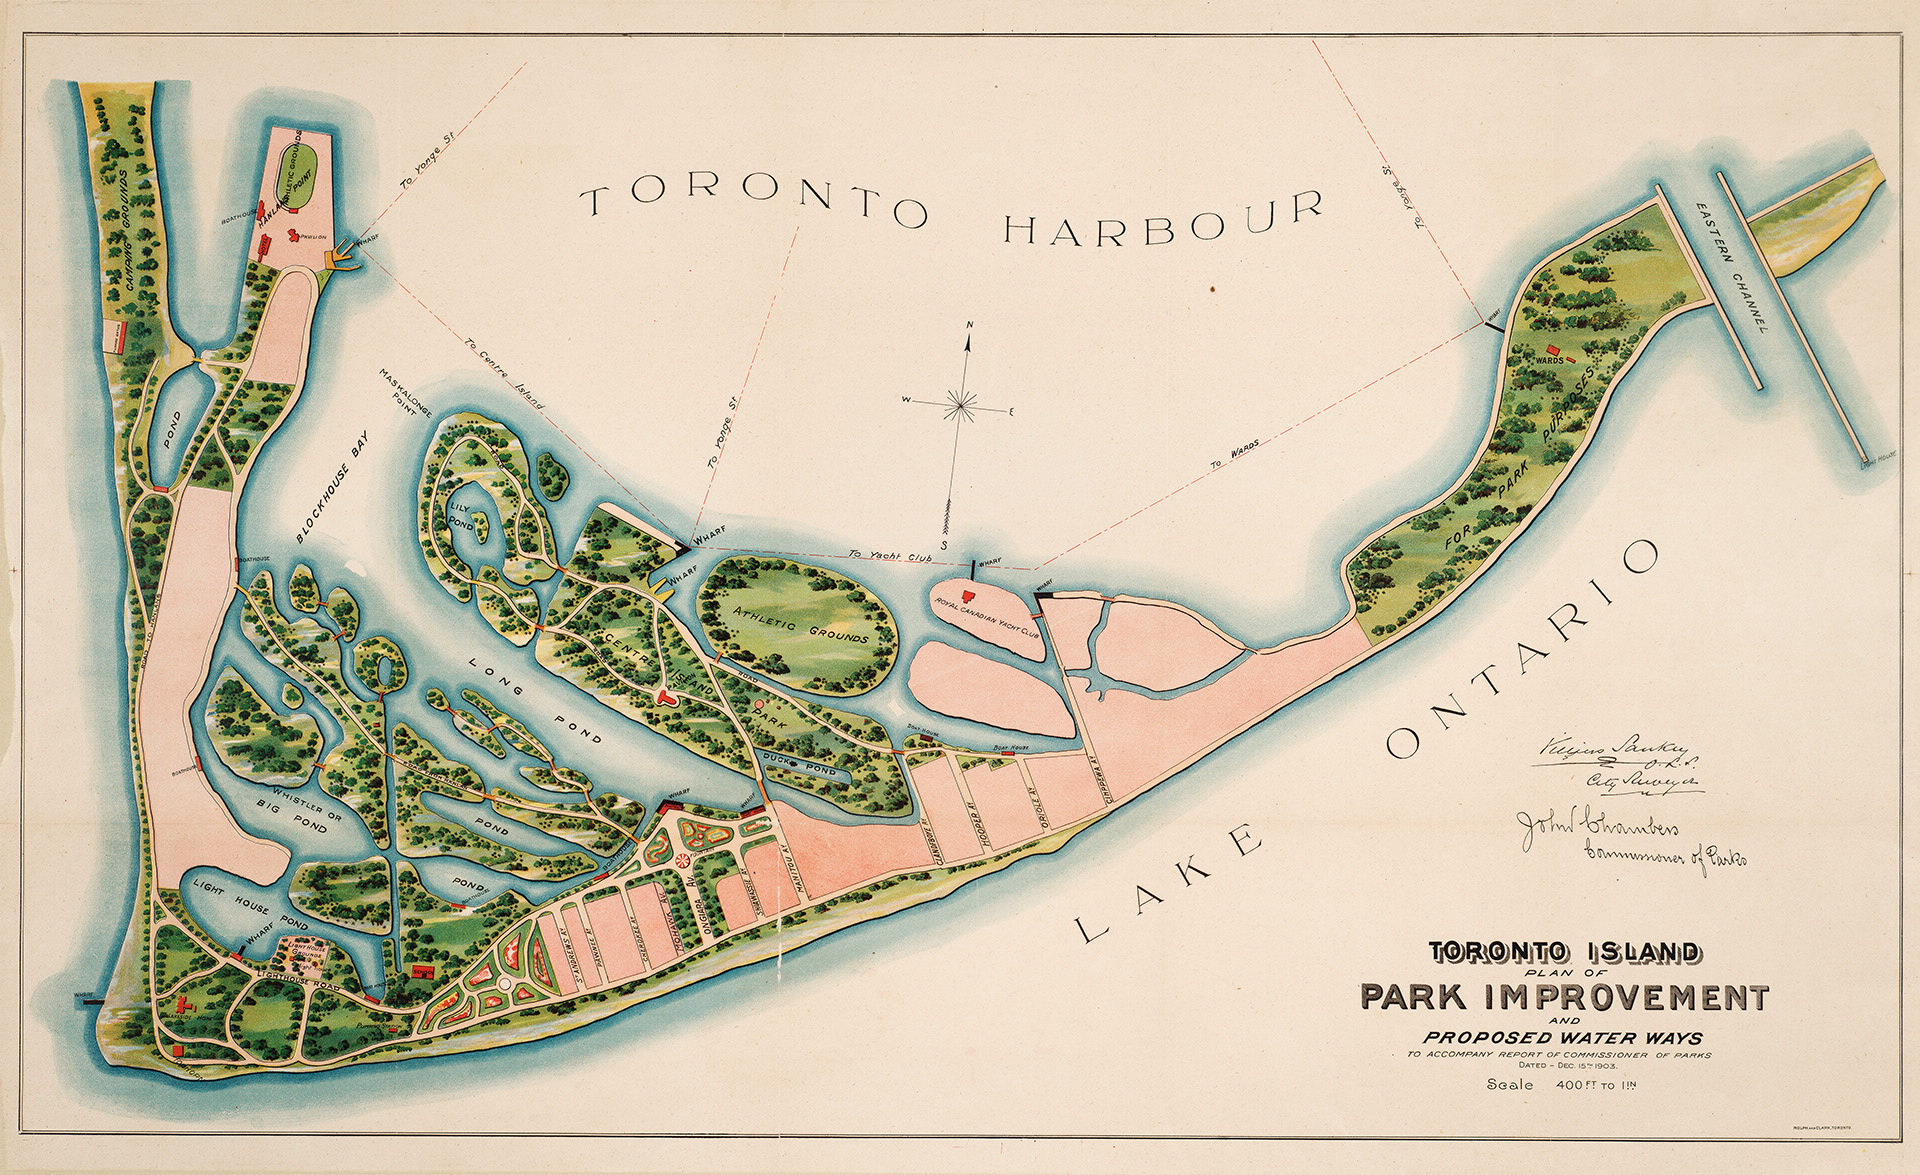 1927 park improvement plan for the Toronto Islands